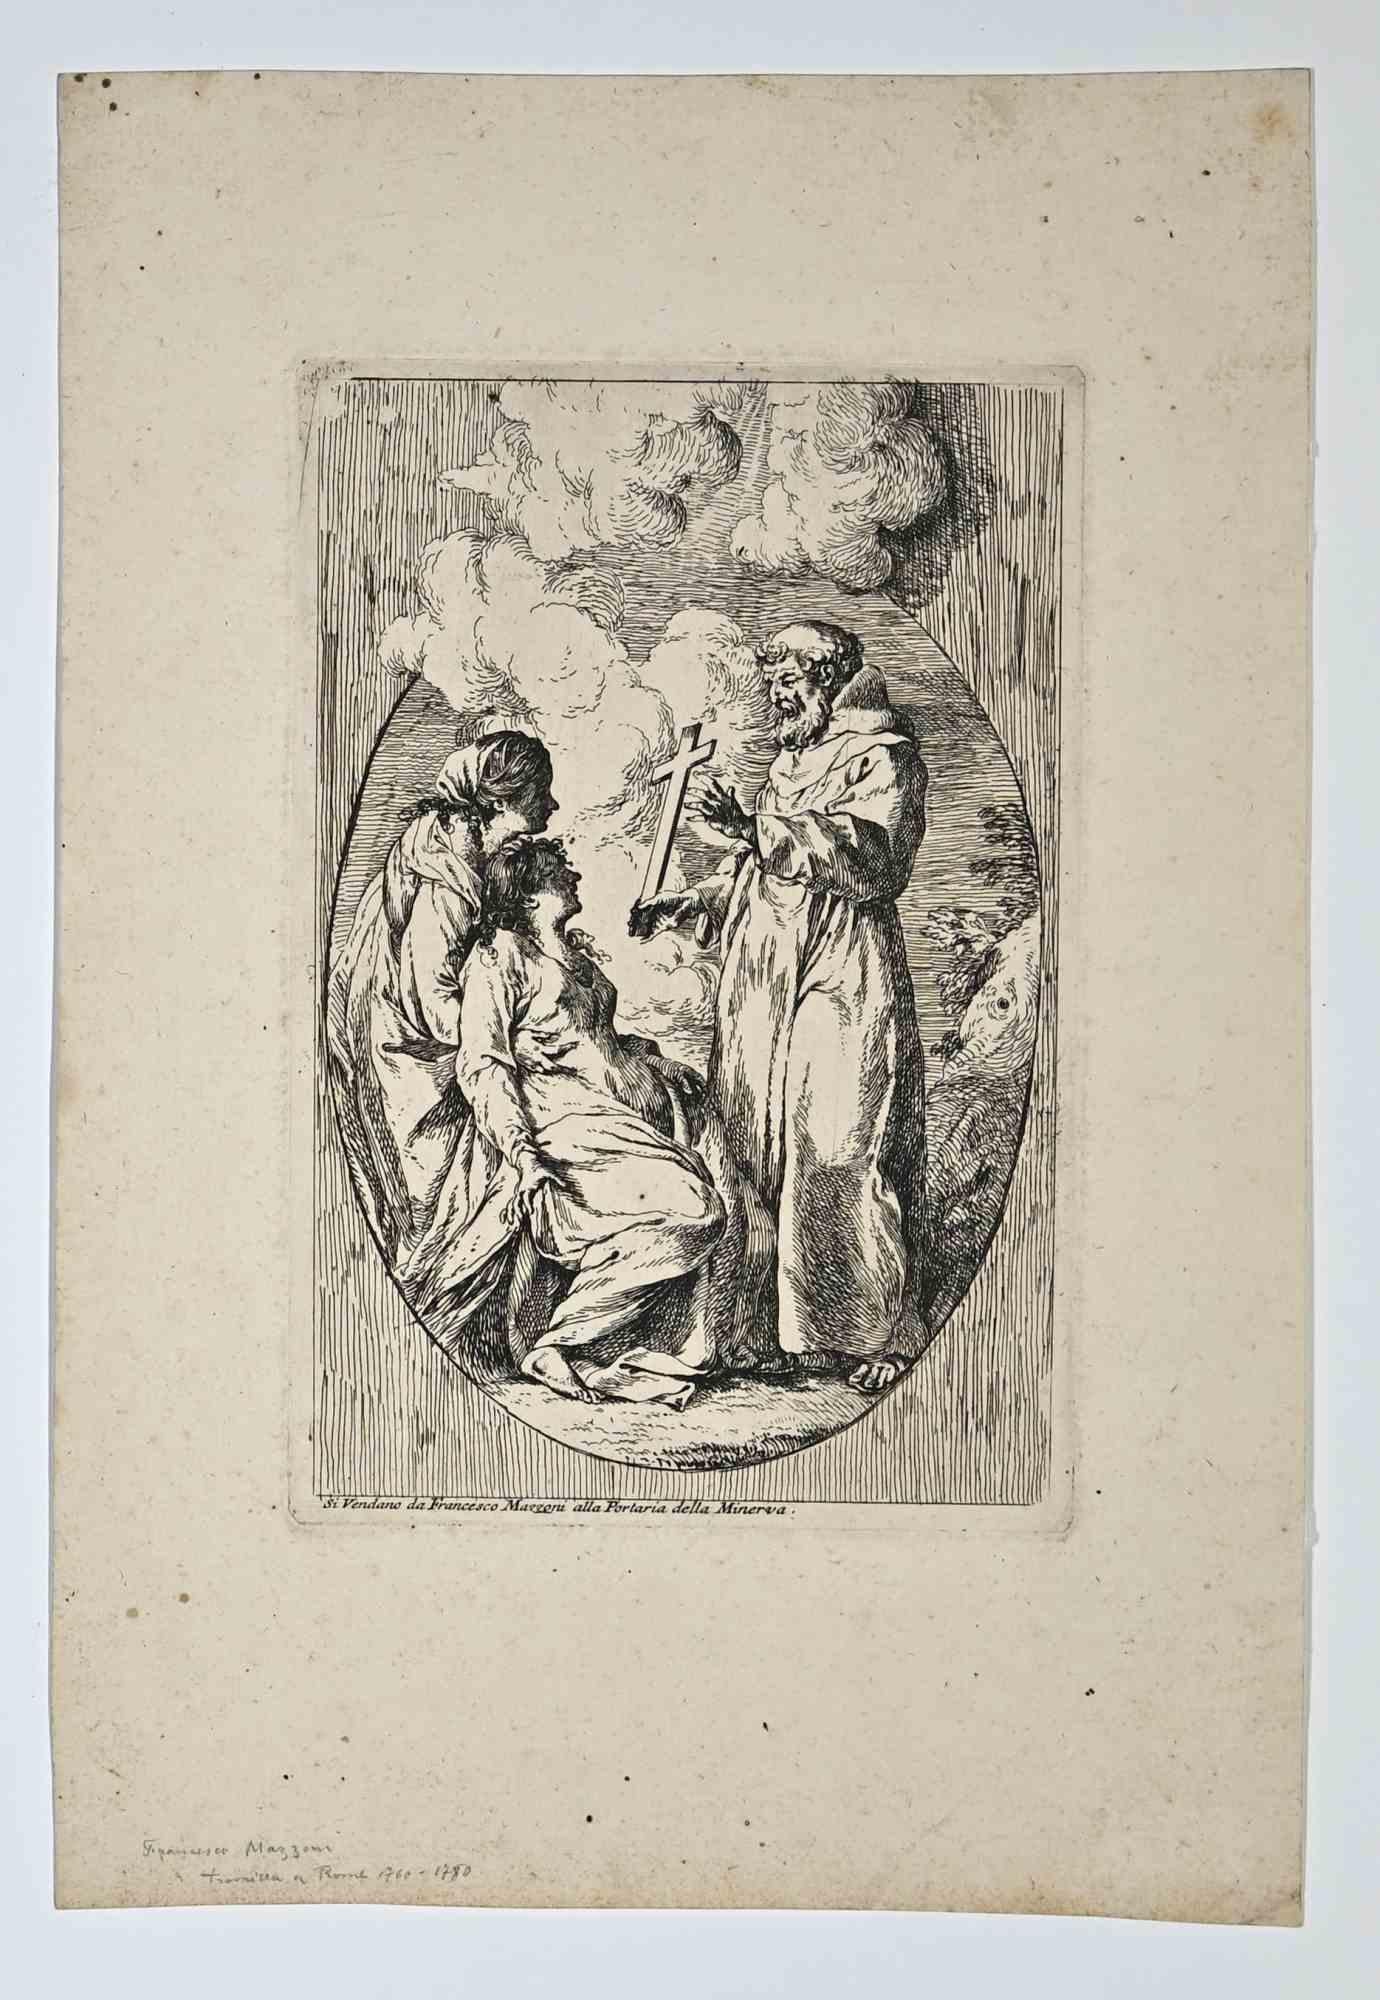 Nicola Vanni Figurative Print - Axiom - Etching by Francesco Mazzoni - 18th Century